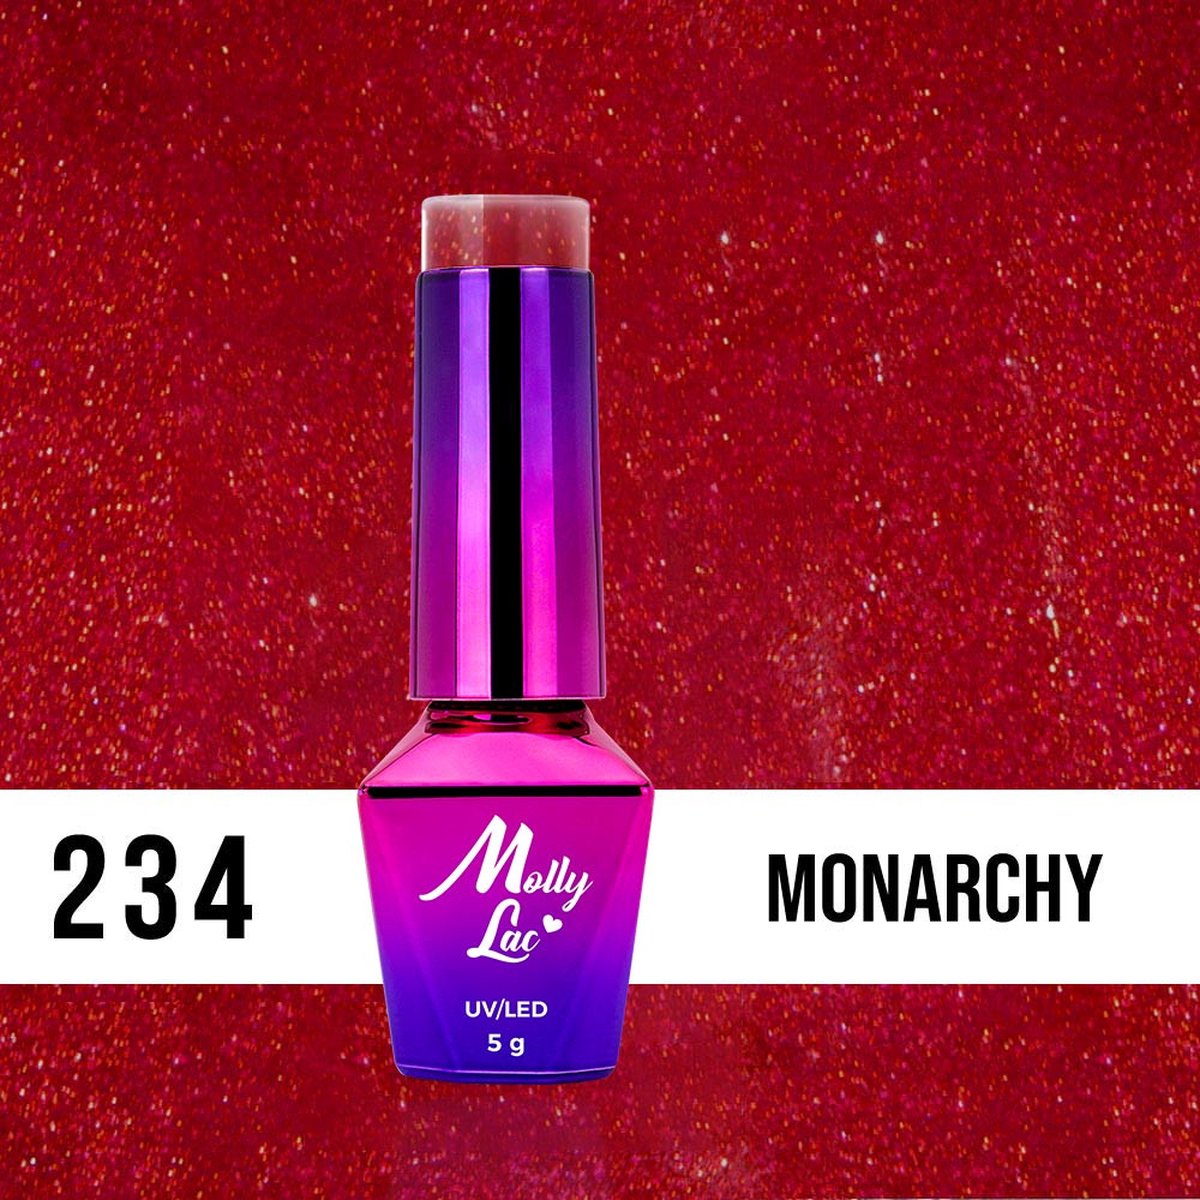 Molly Lac Glowing time - Monarchy nr 234 5ml